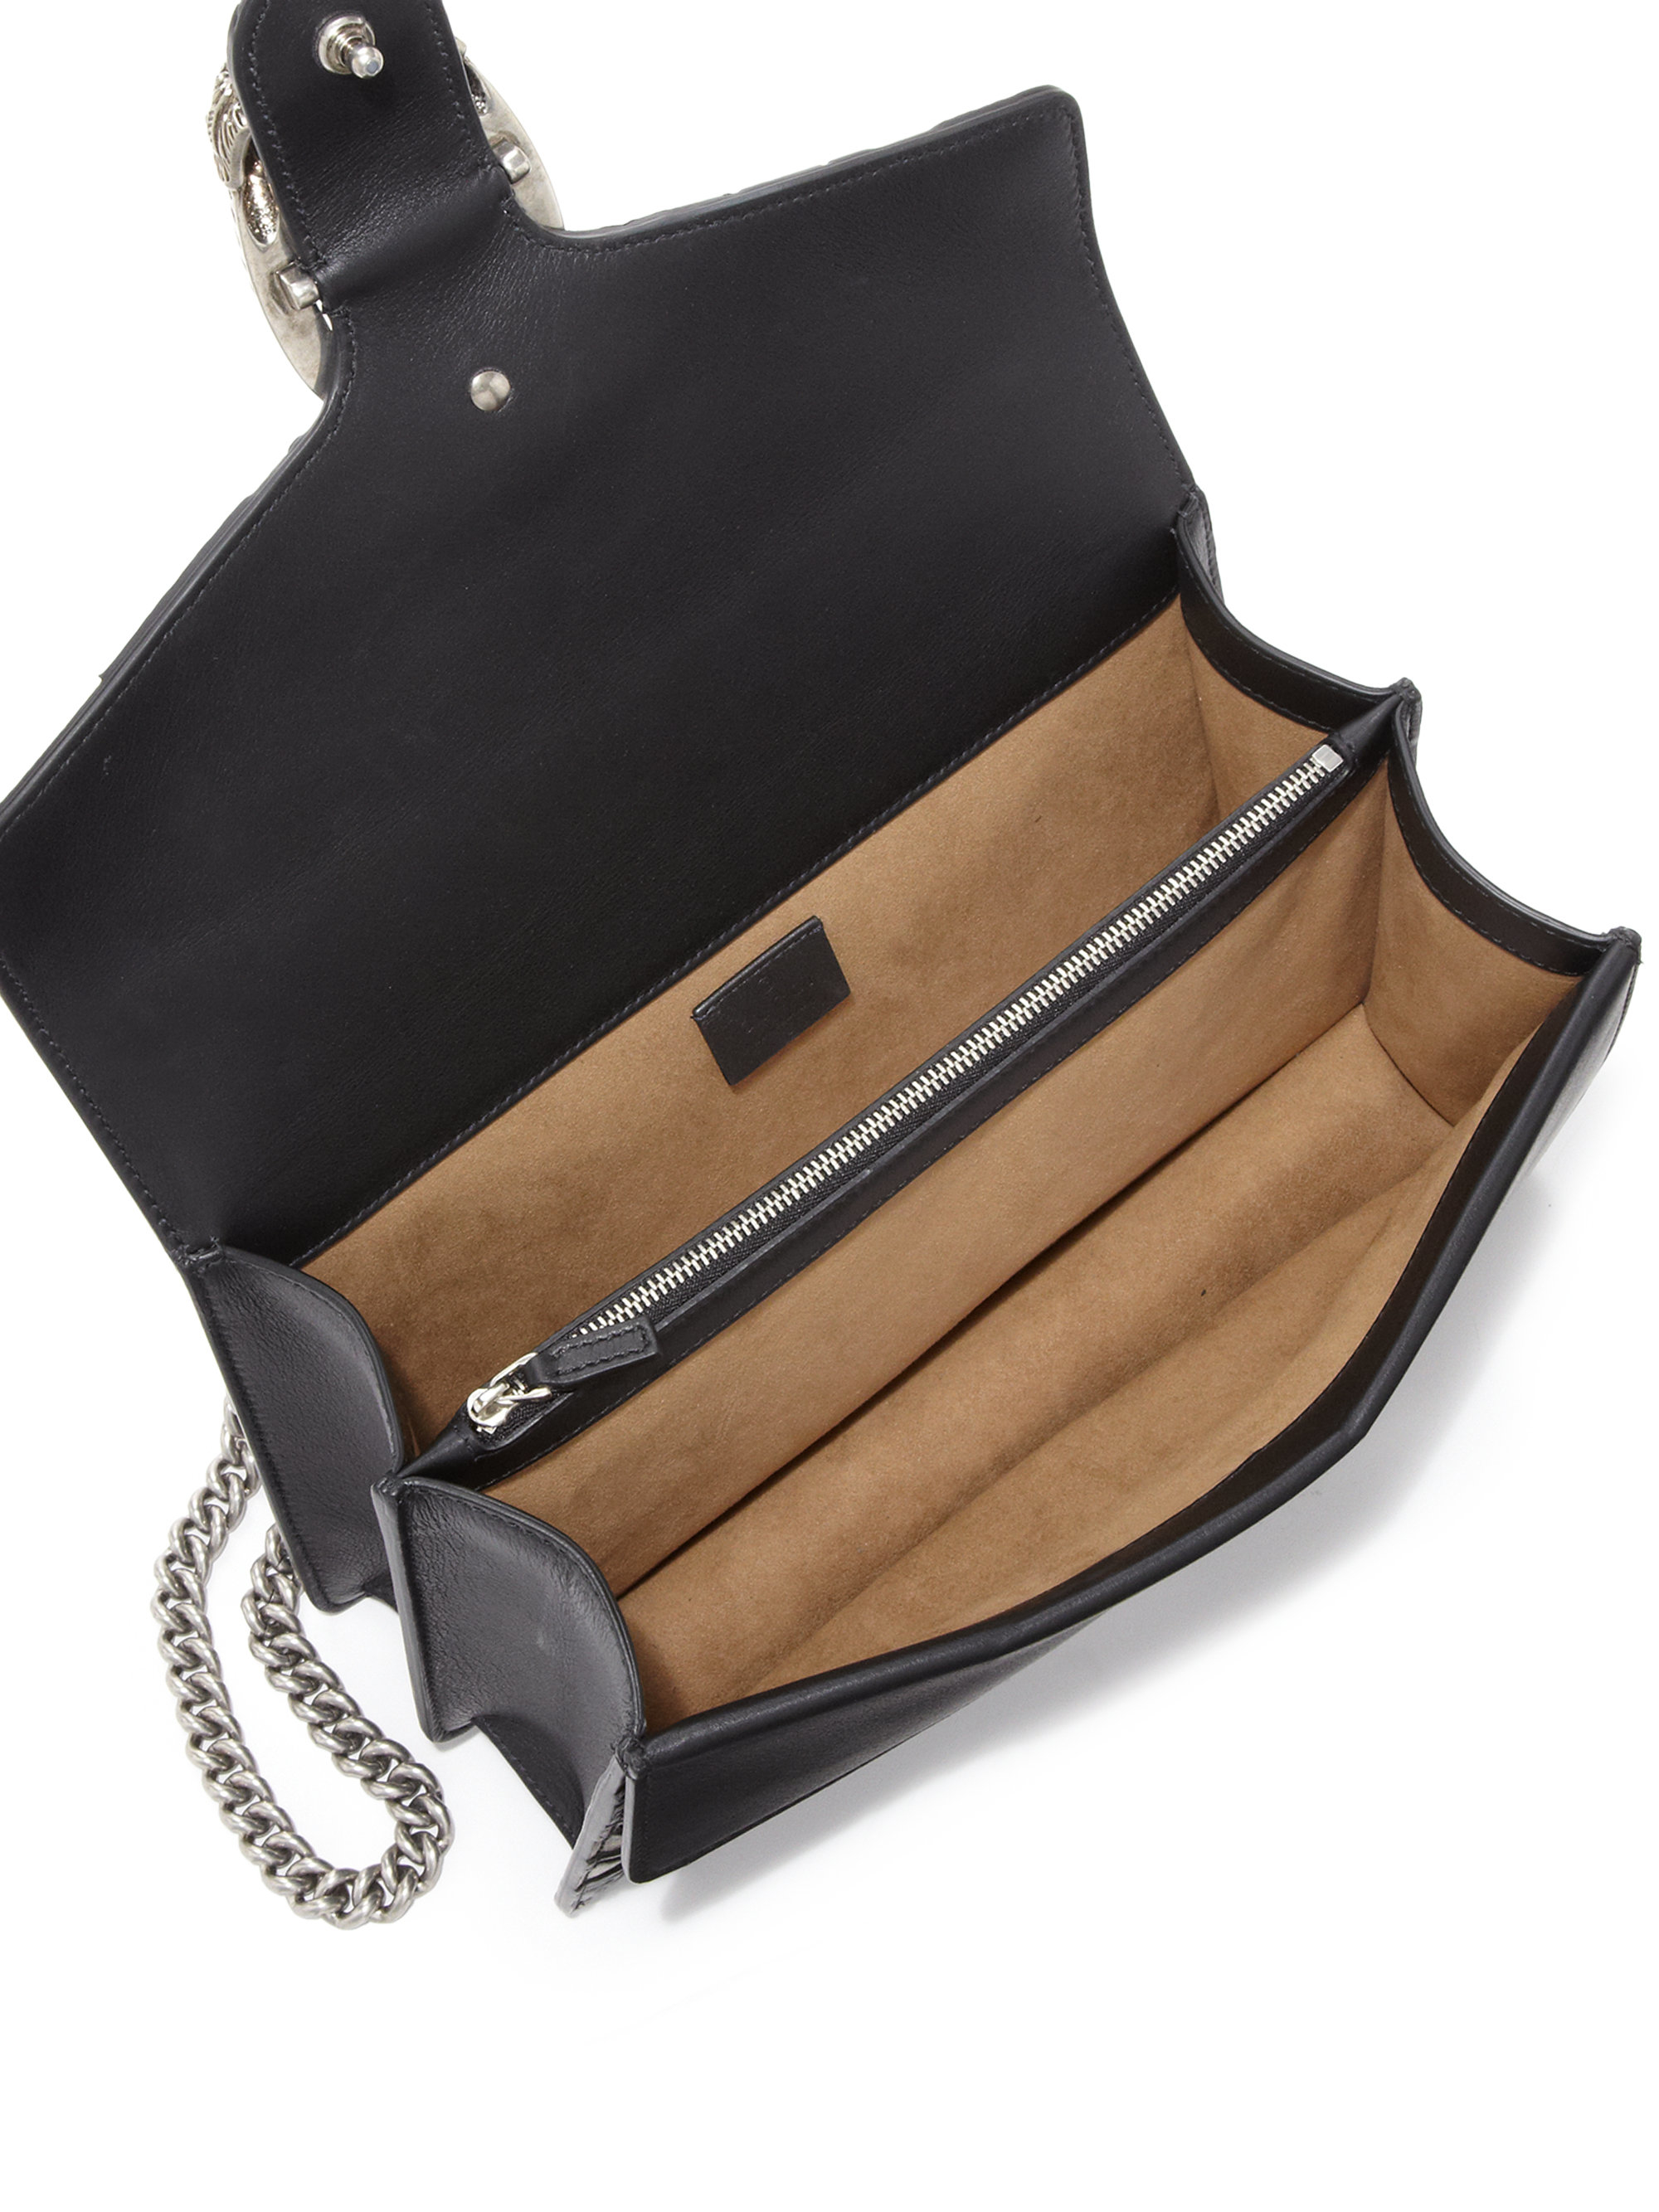 Gucci Dionysus Small Arabesque Shoulder Bag in Beige-Black (Black) - Lyst